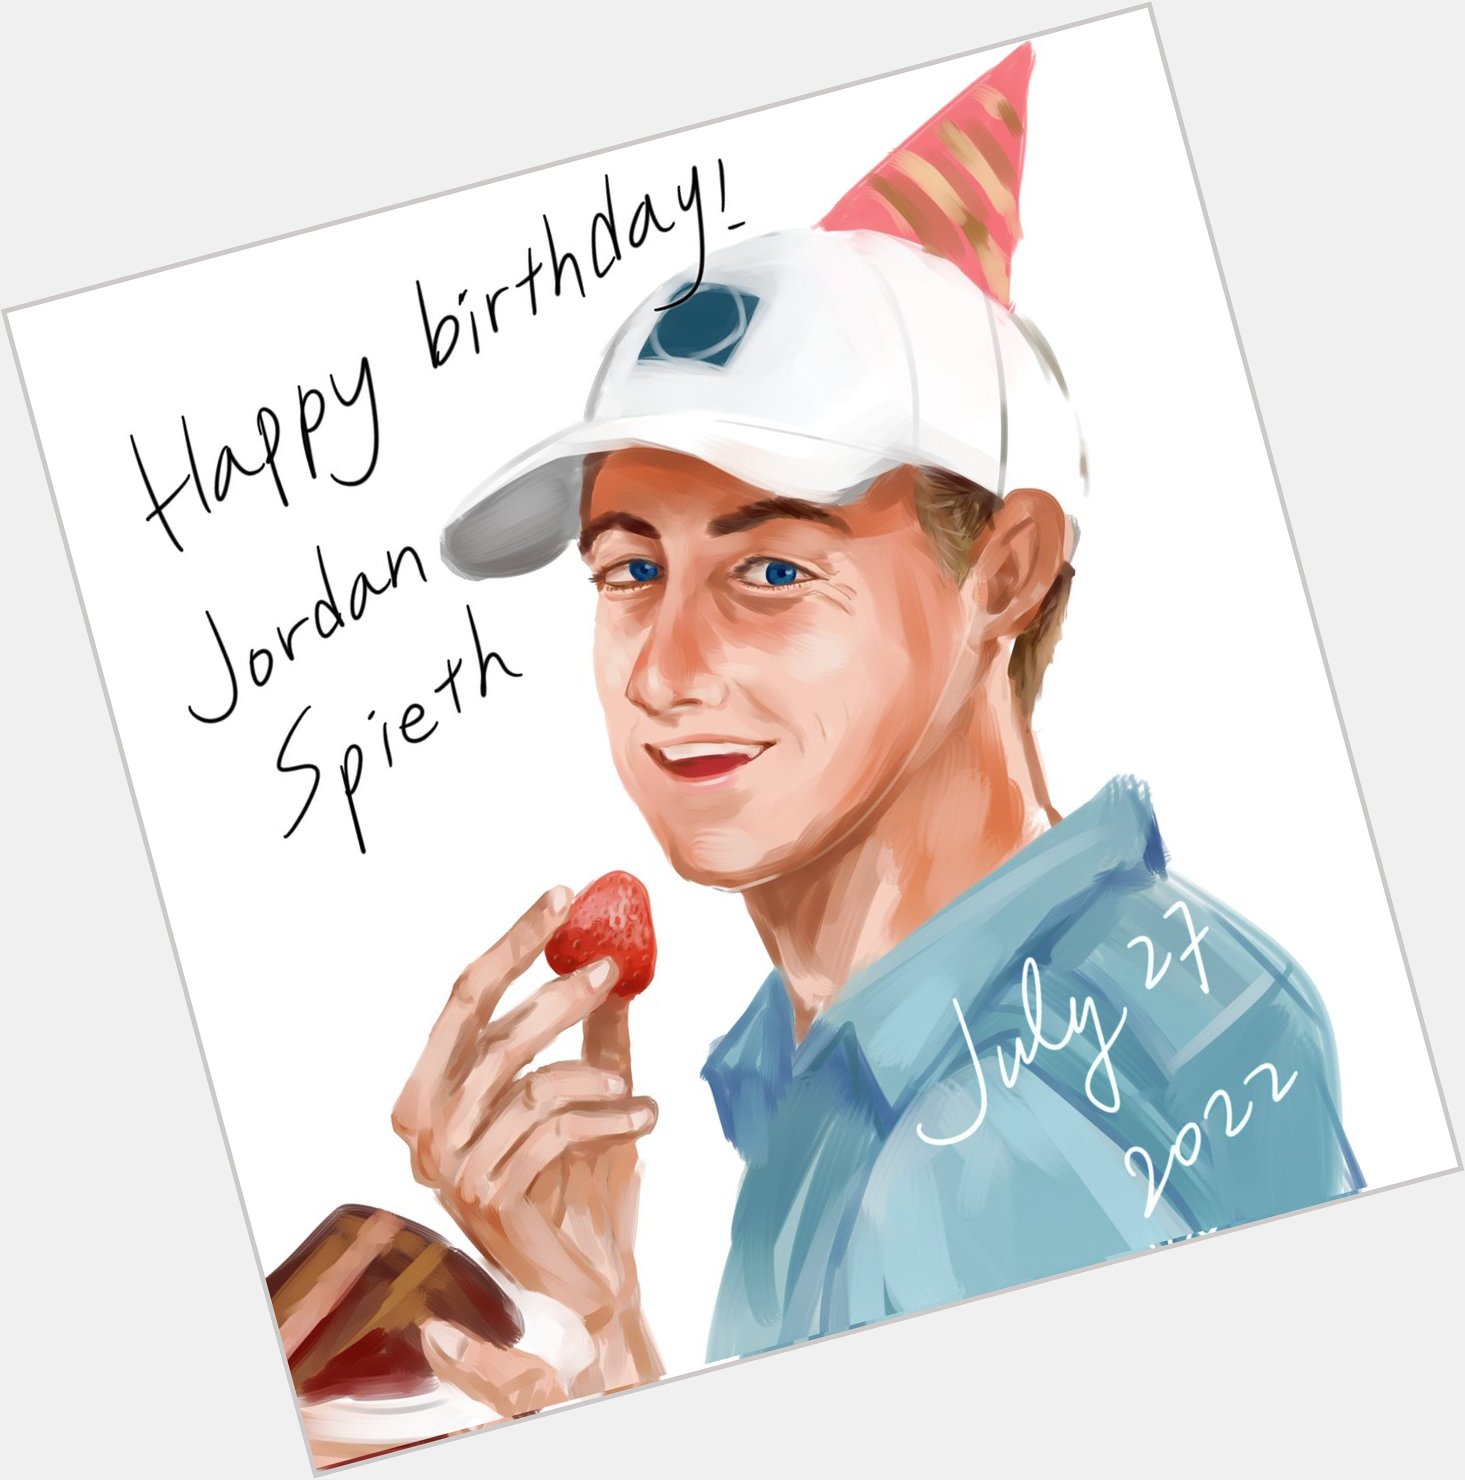 Happy birthday Jordan Spieth Class. Enthusiastic. Always one of my fav golfers. 